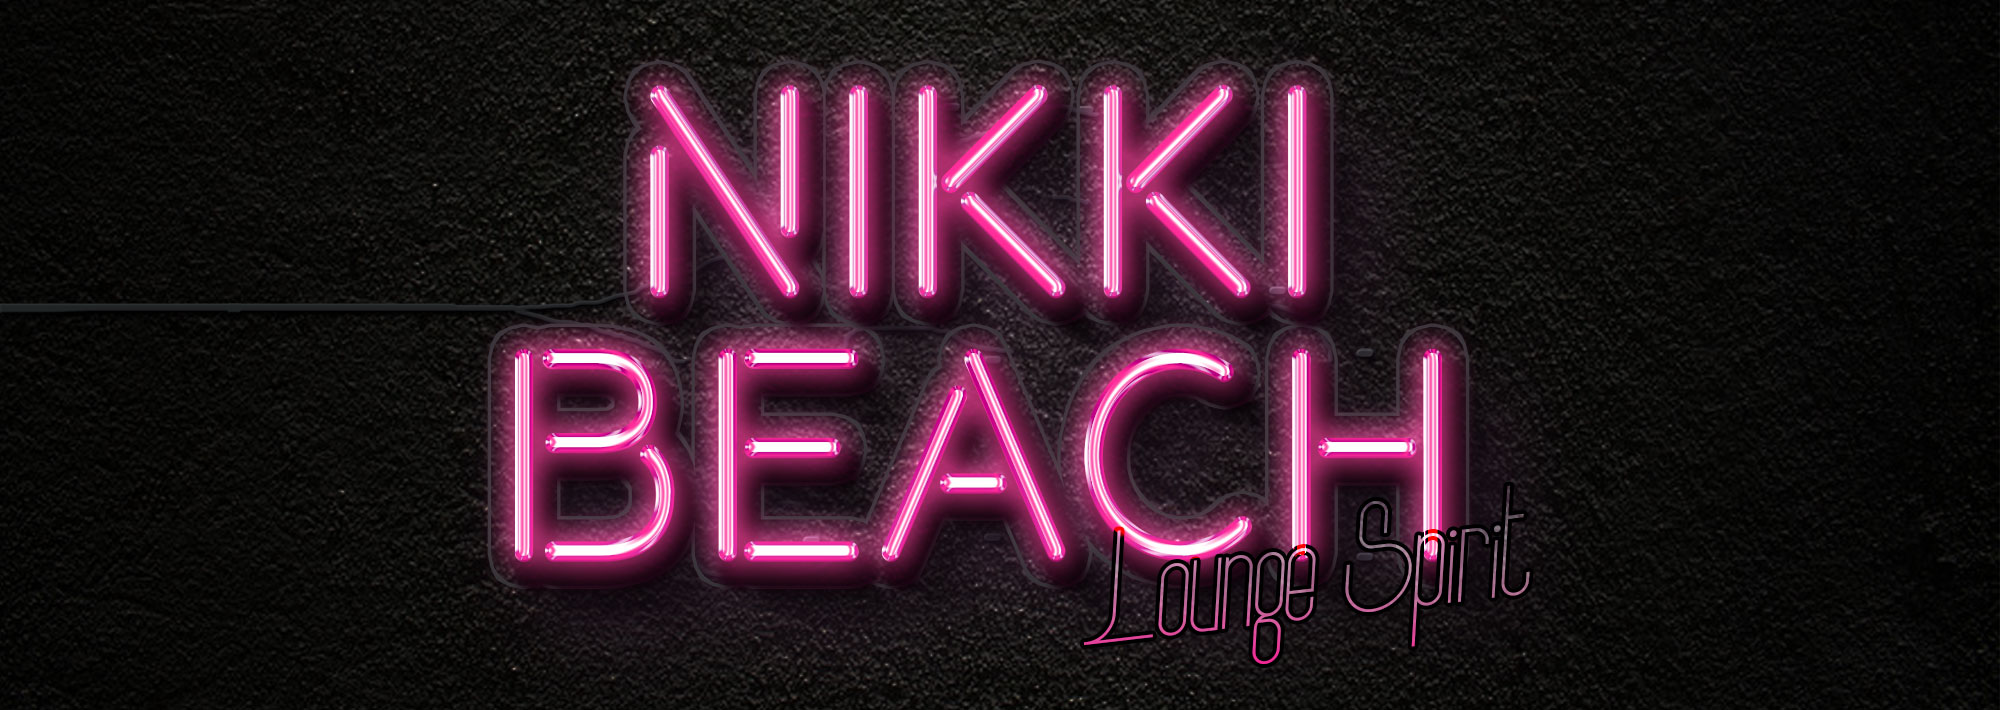 Nikki Beach Loung Spirit by T.Boon 2012